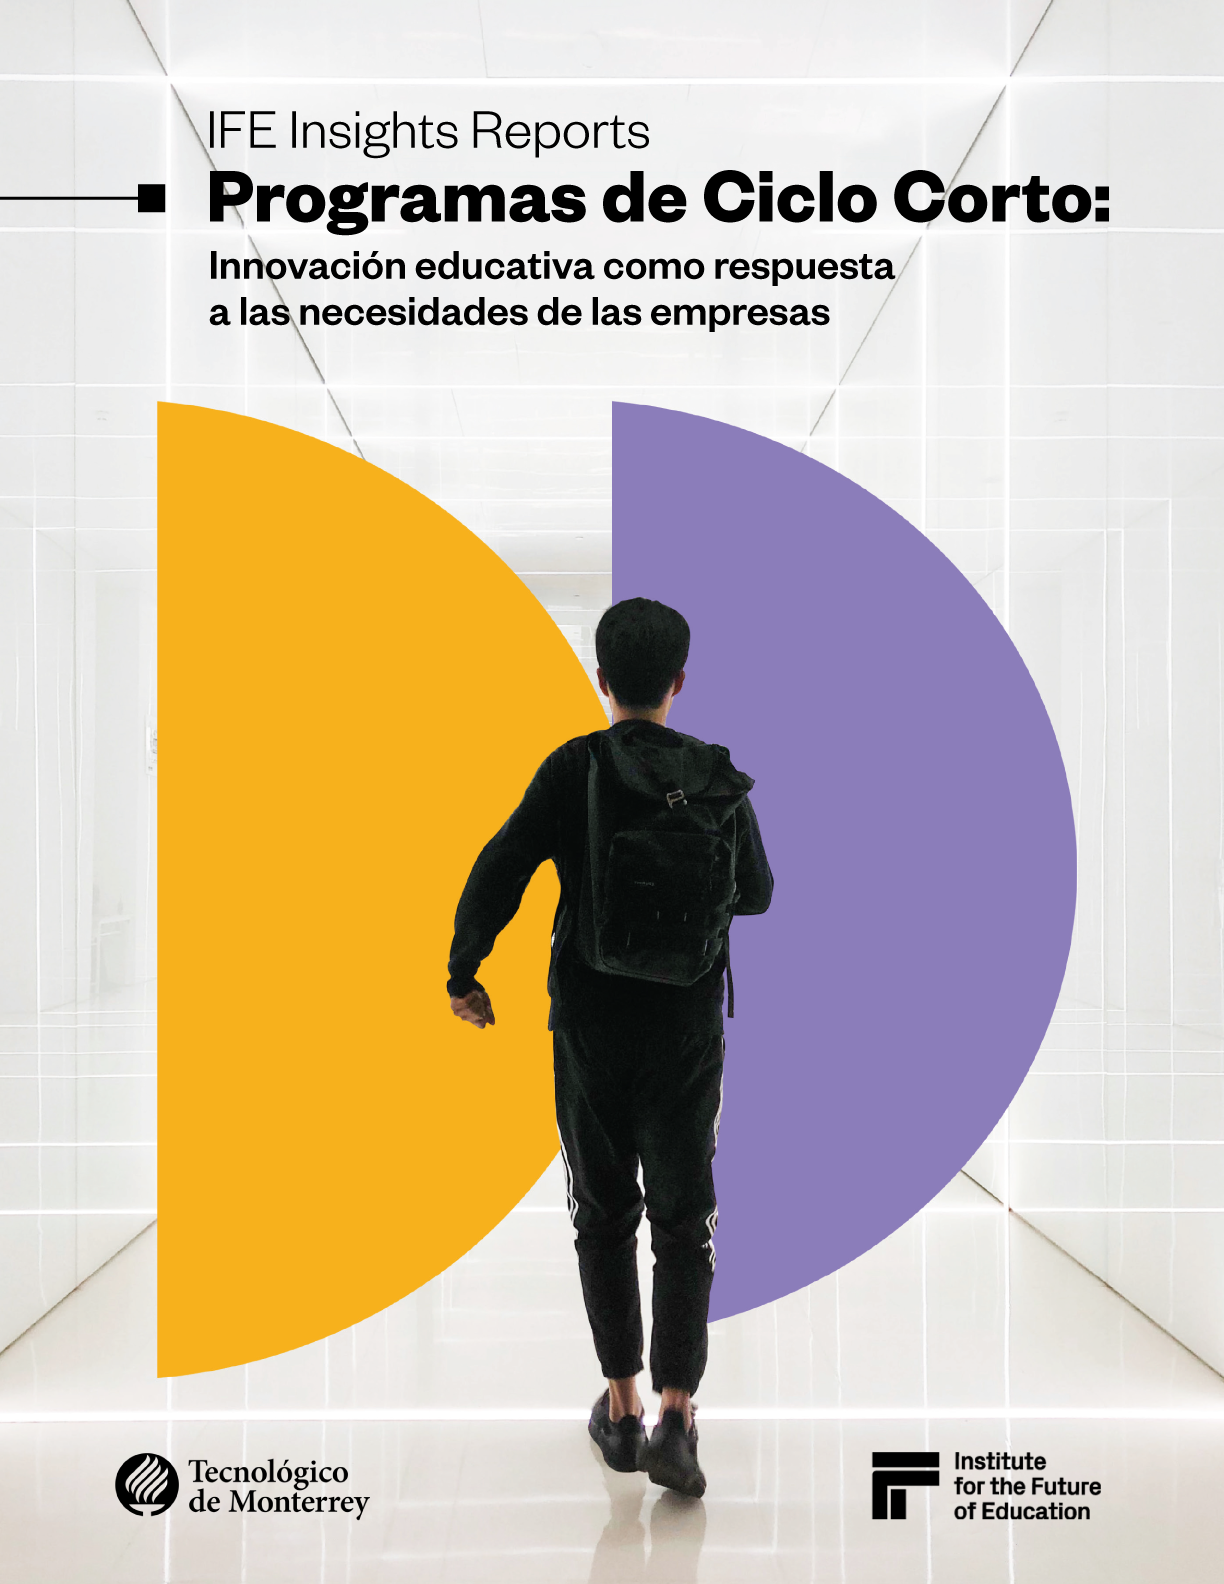 IFE Insights Reports: Programas de Ciclo Corto